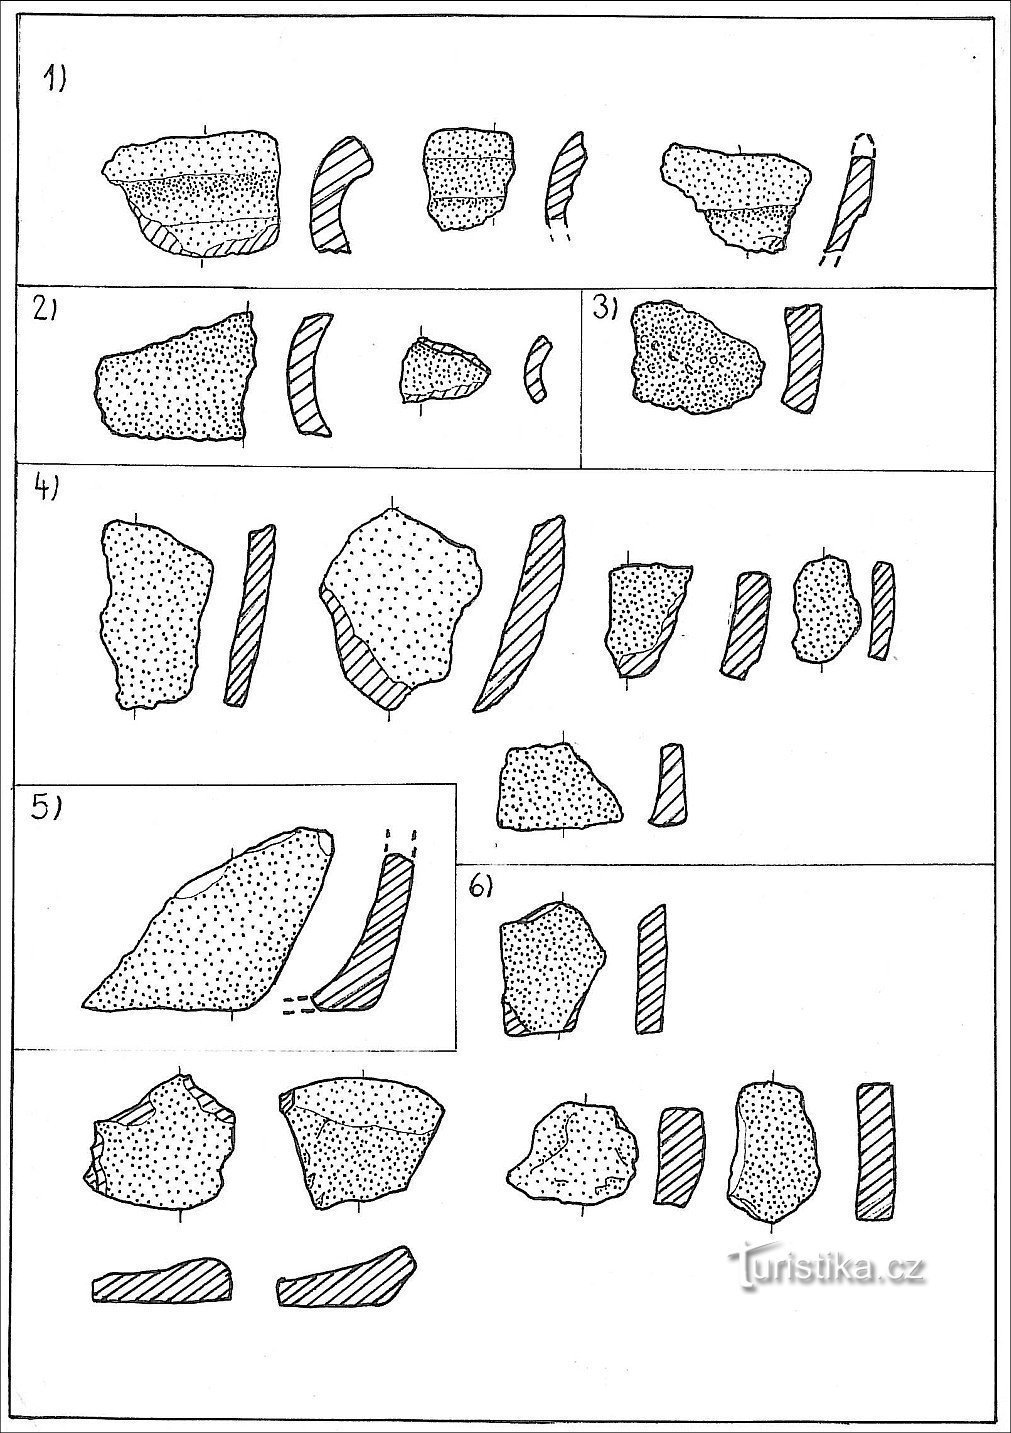 exemplos de cerâmica de castro; 1) bordas, 2) gargantas, 3) ombros, 4) corpo, 5) base, 6) fundos